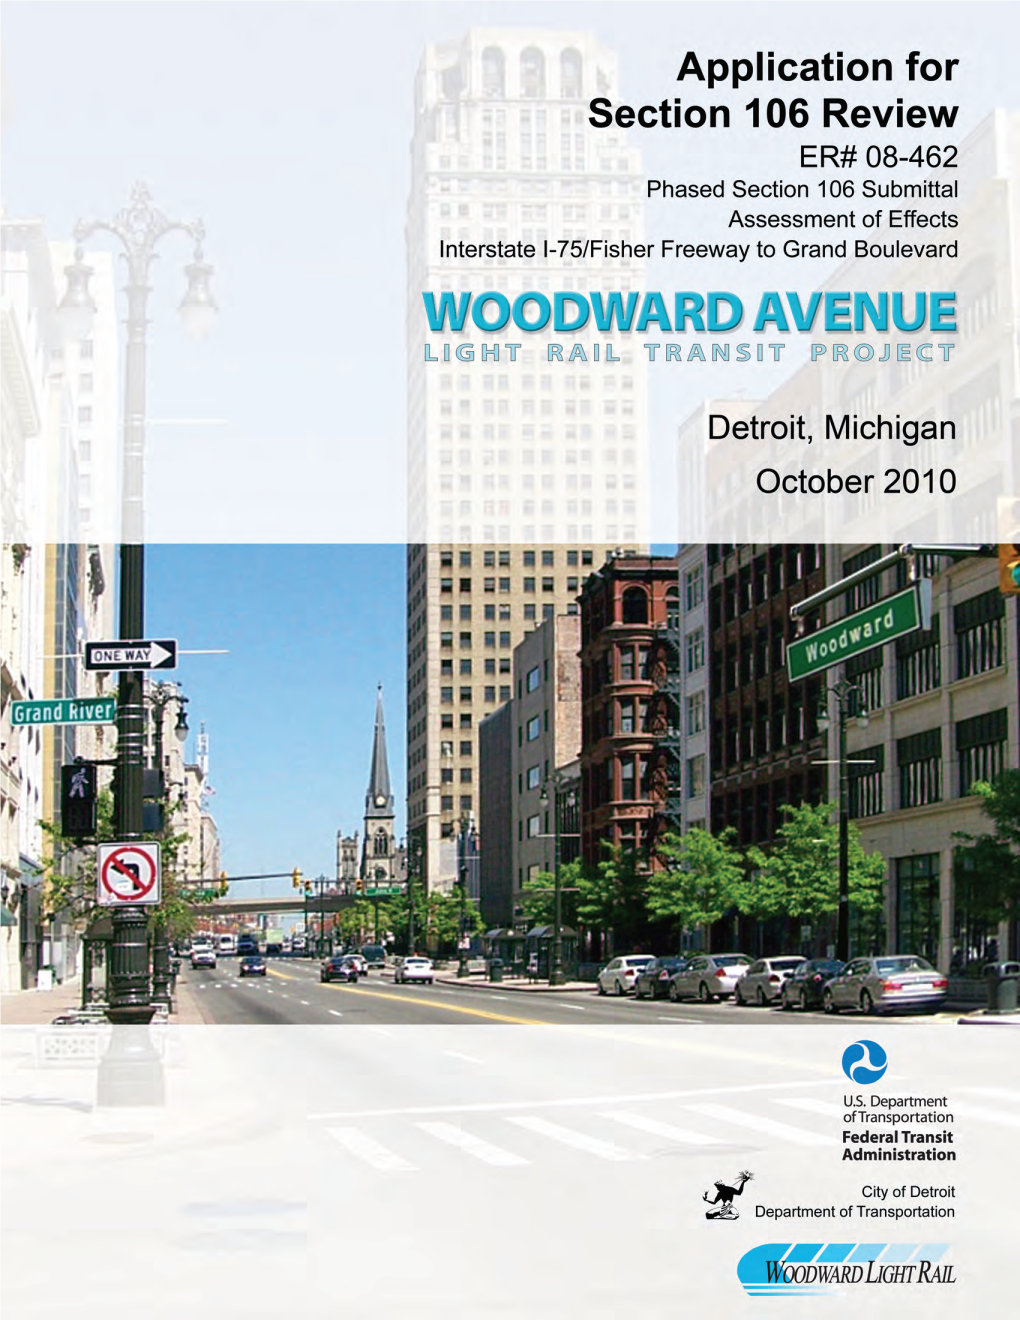 MDOT-Woodward Avenue Light Rail Transit Project